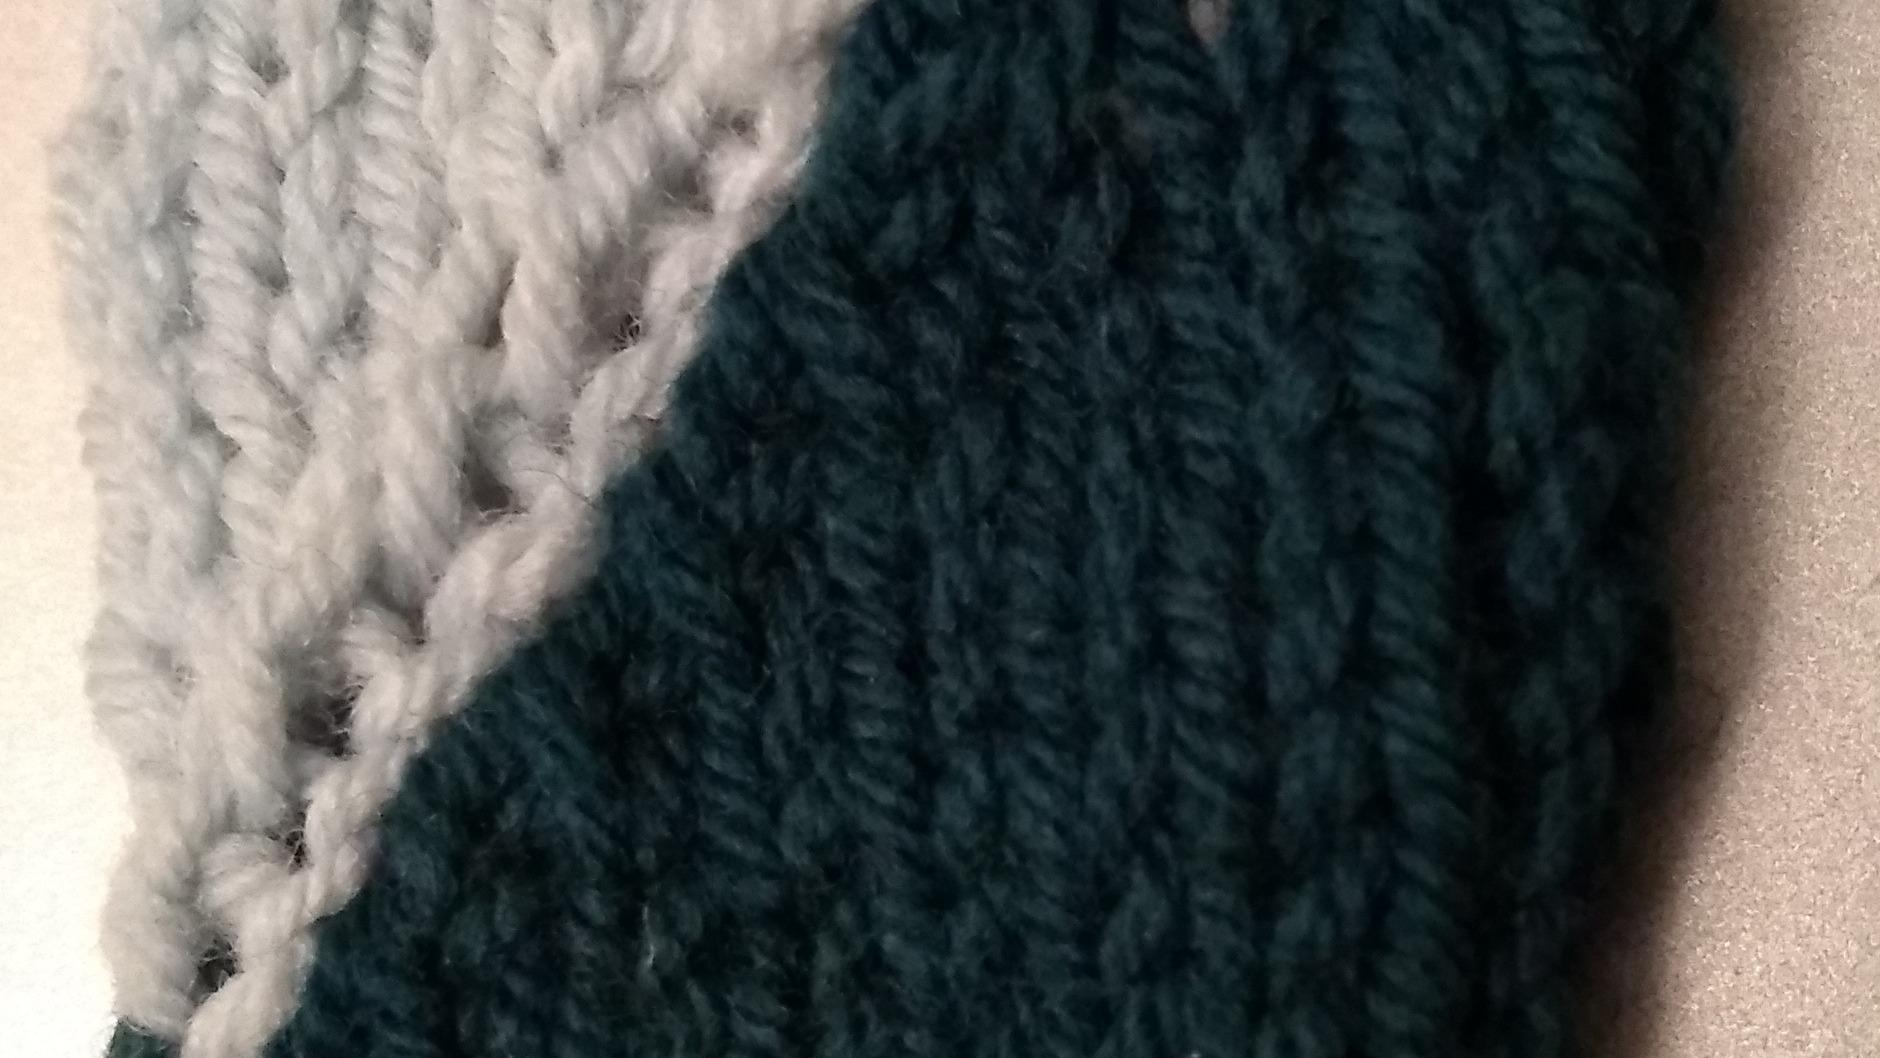 Shaped Intarsia knitting